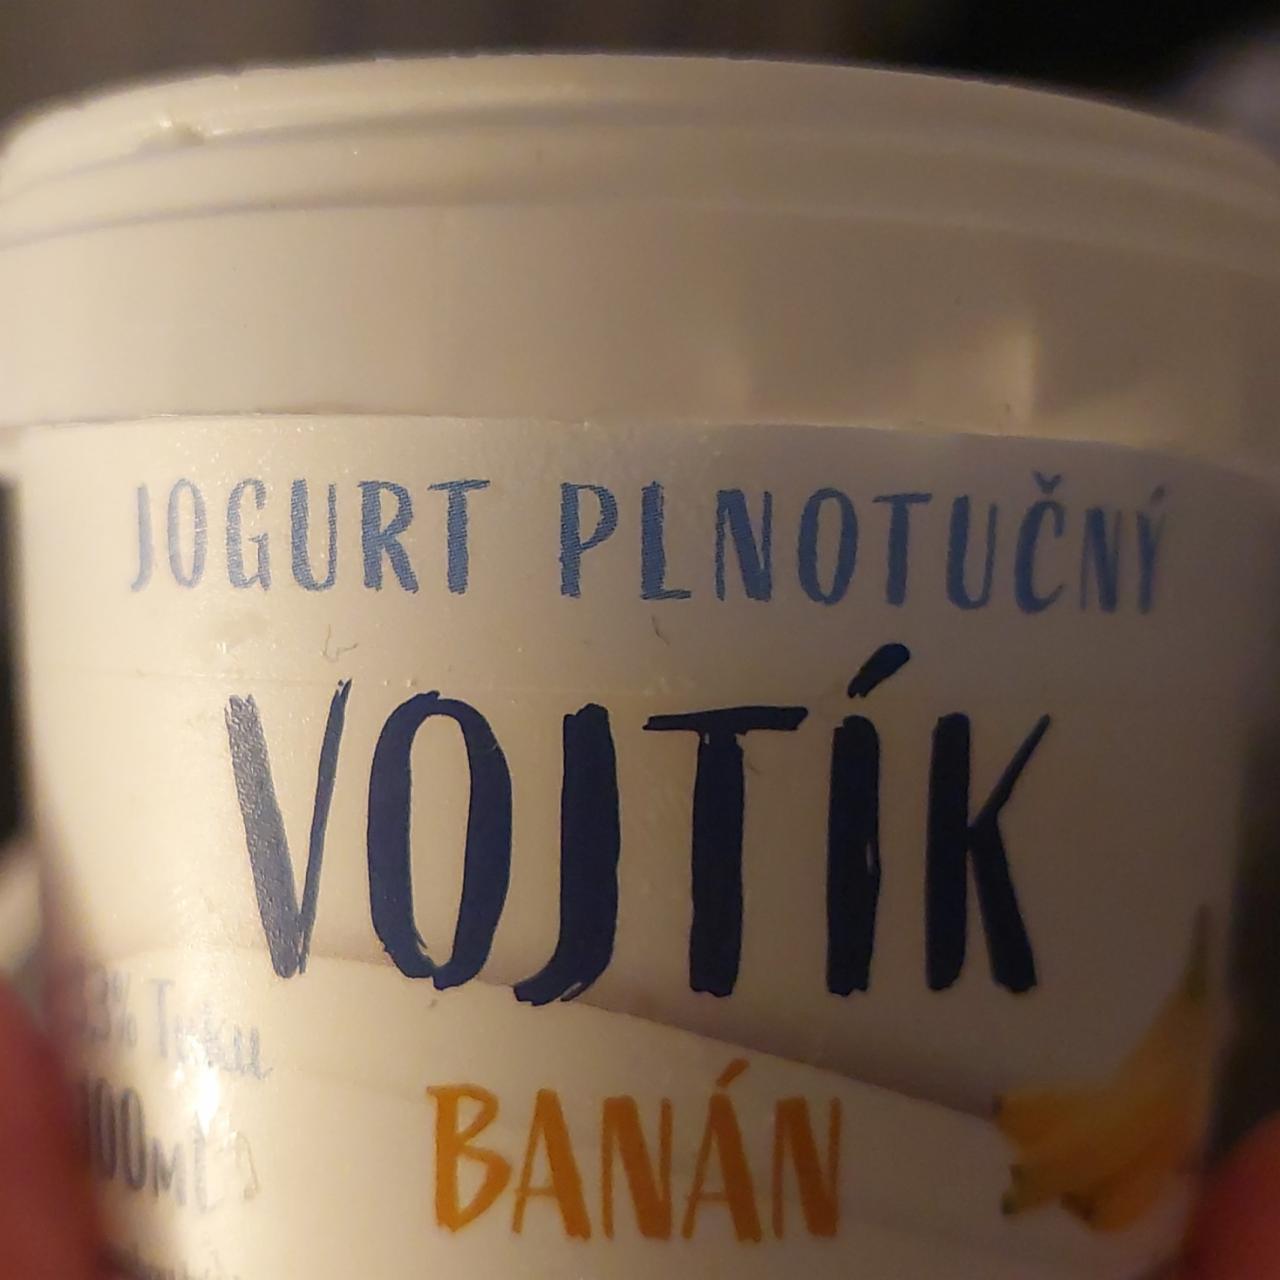 Fotografie - Jogurt plnotučný Vojtík banán Mafita